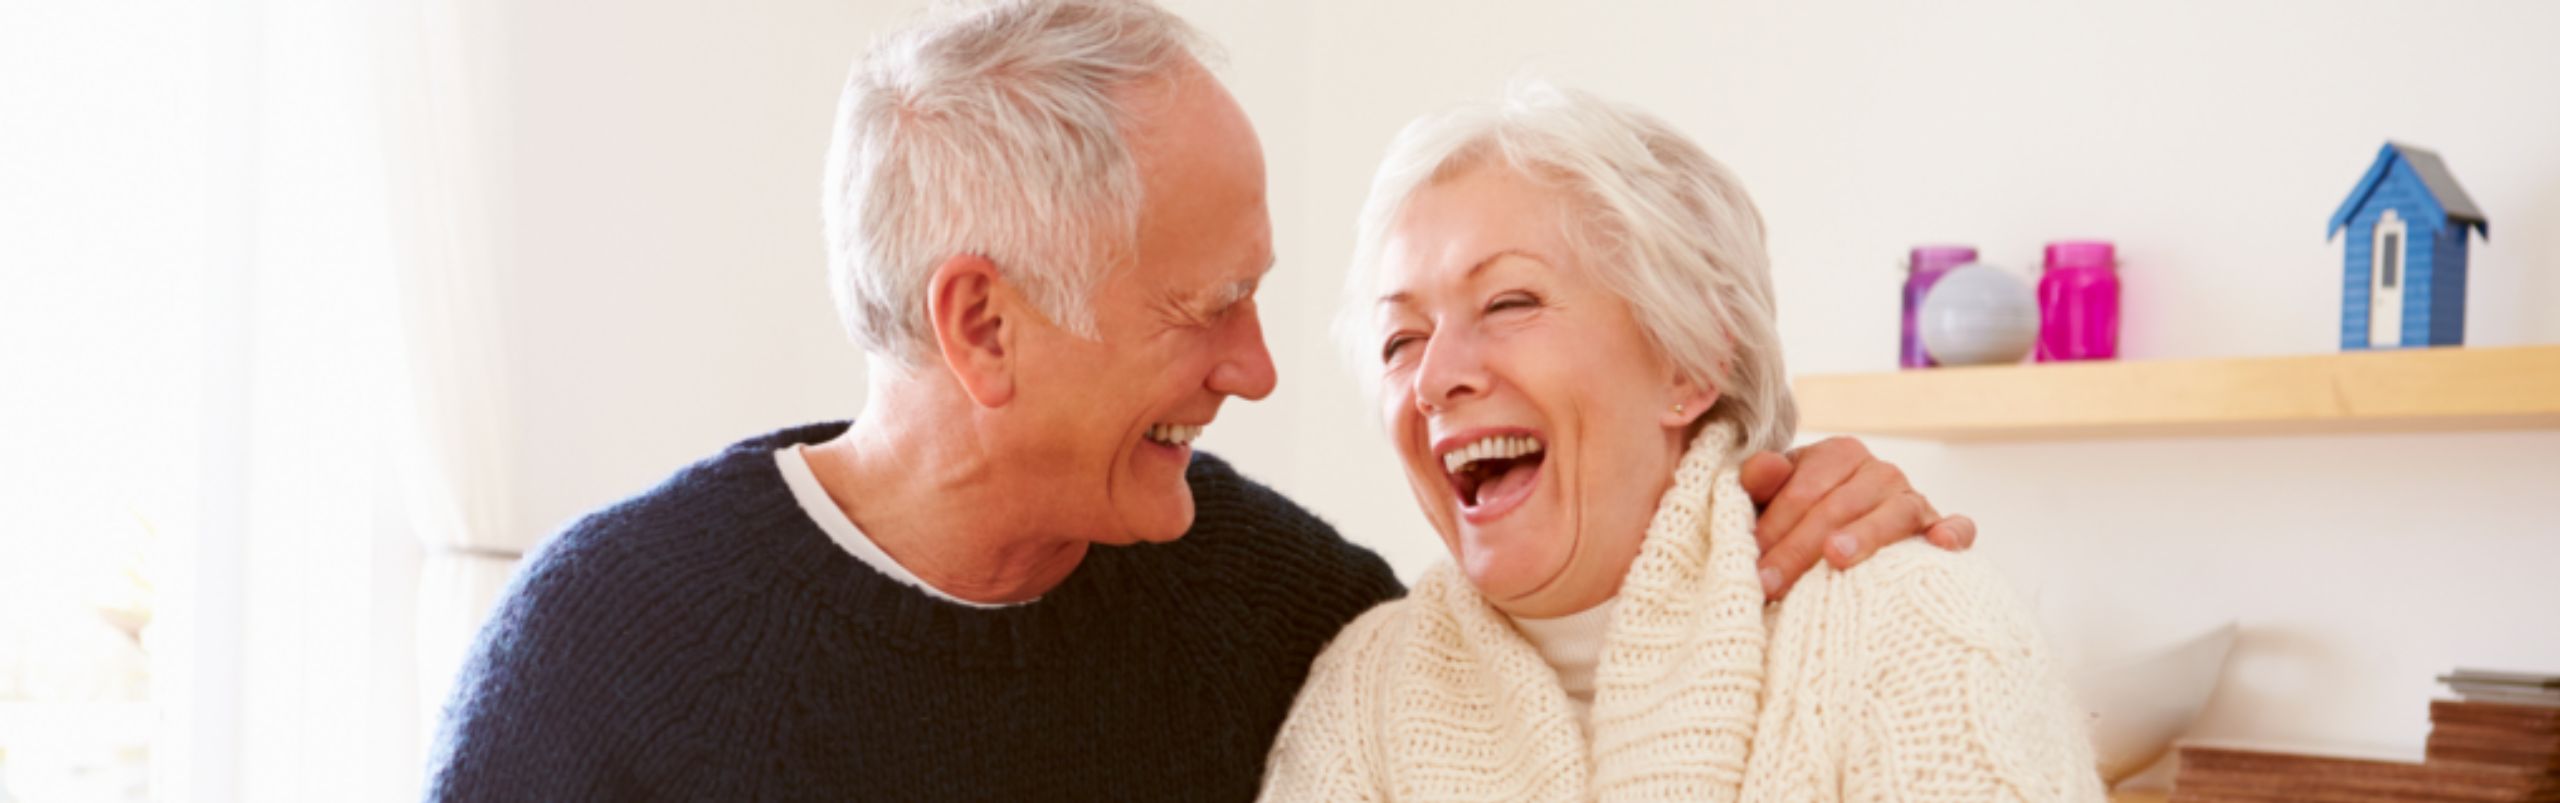 senior couple with man's arm around woman laughing